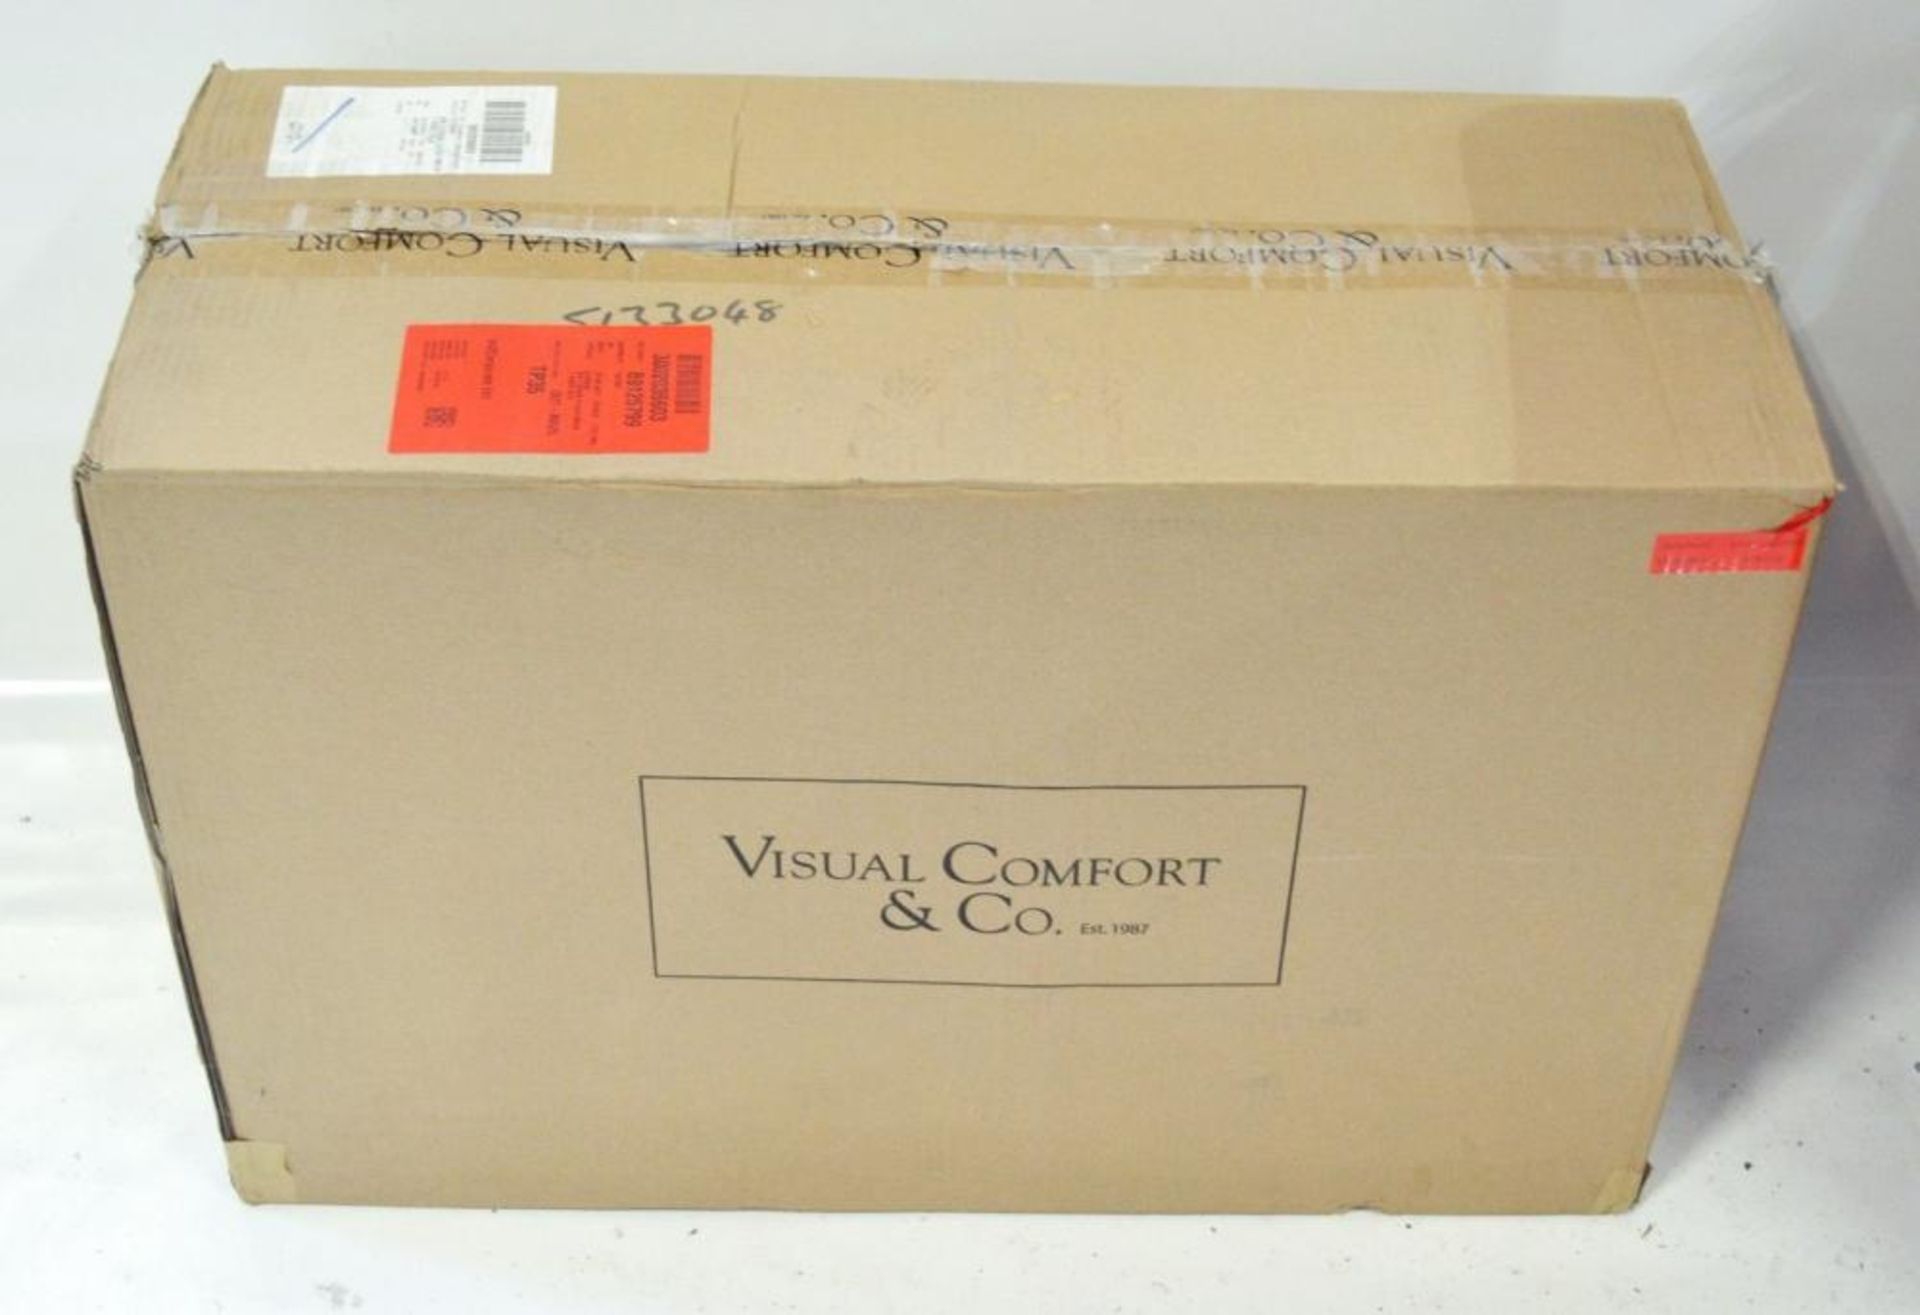 1 x KELLY WEARSTLER "Strada" Large Pendant Light Fitting - Unused Stock In Original Box - Ref: 56008 - Image 2 of 8